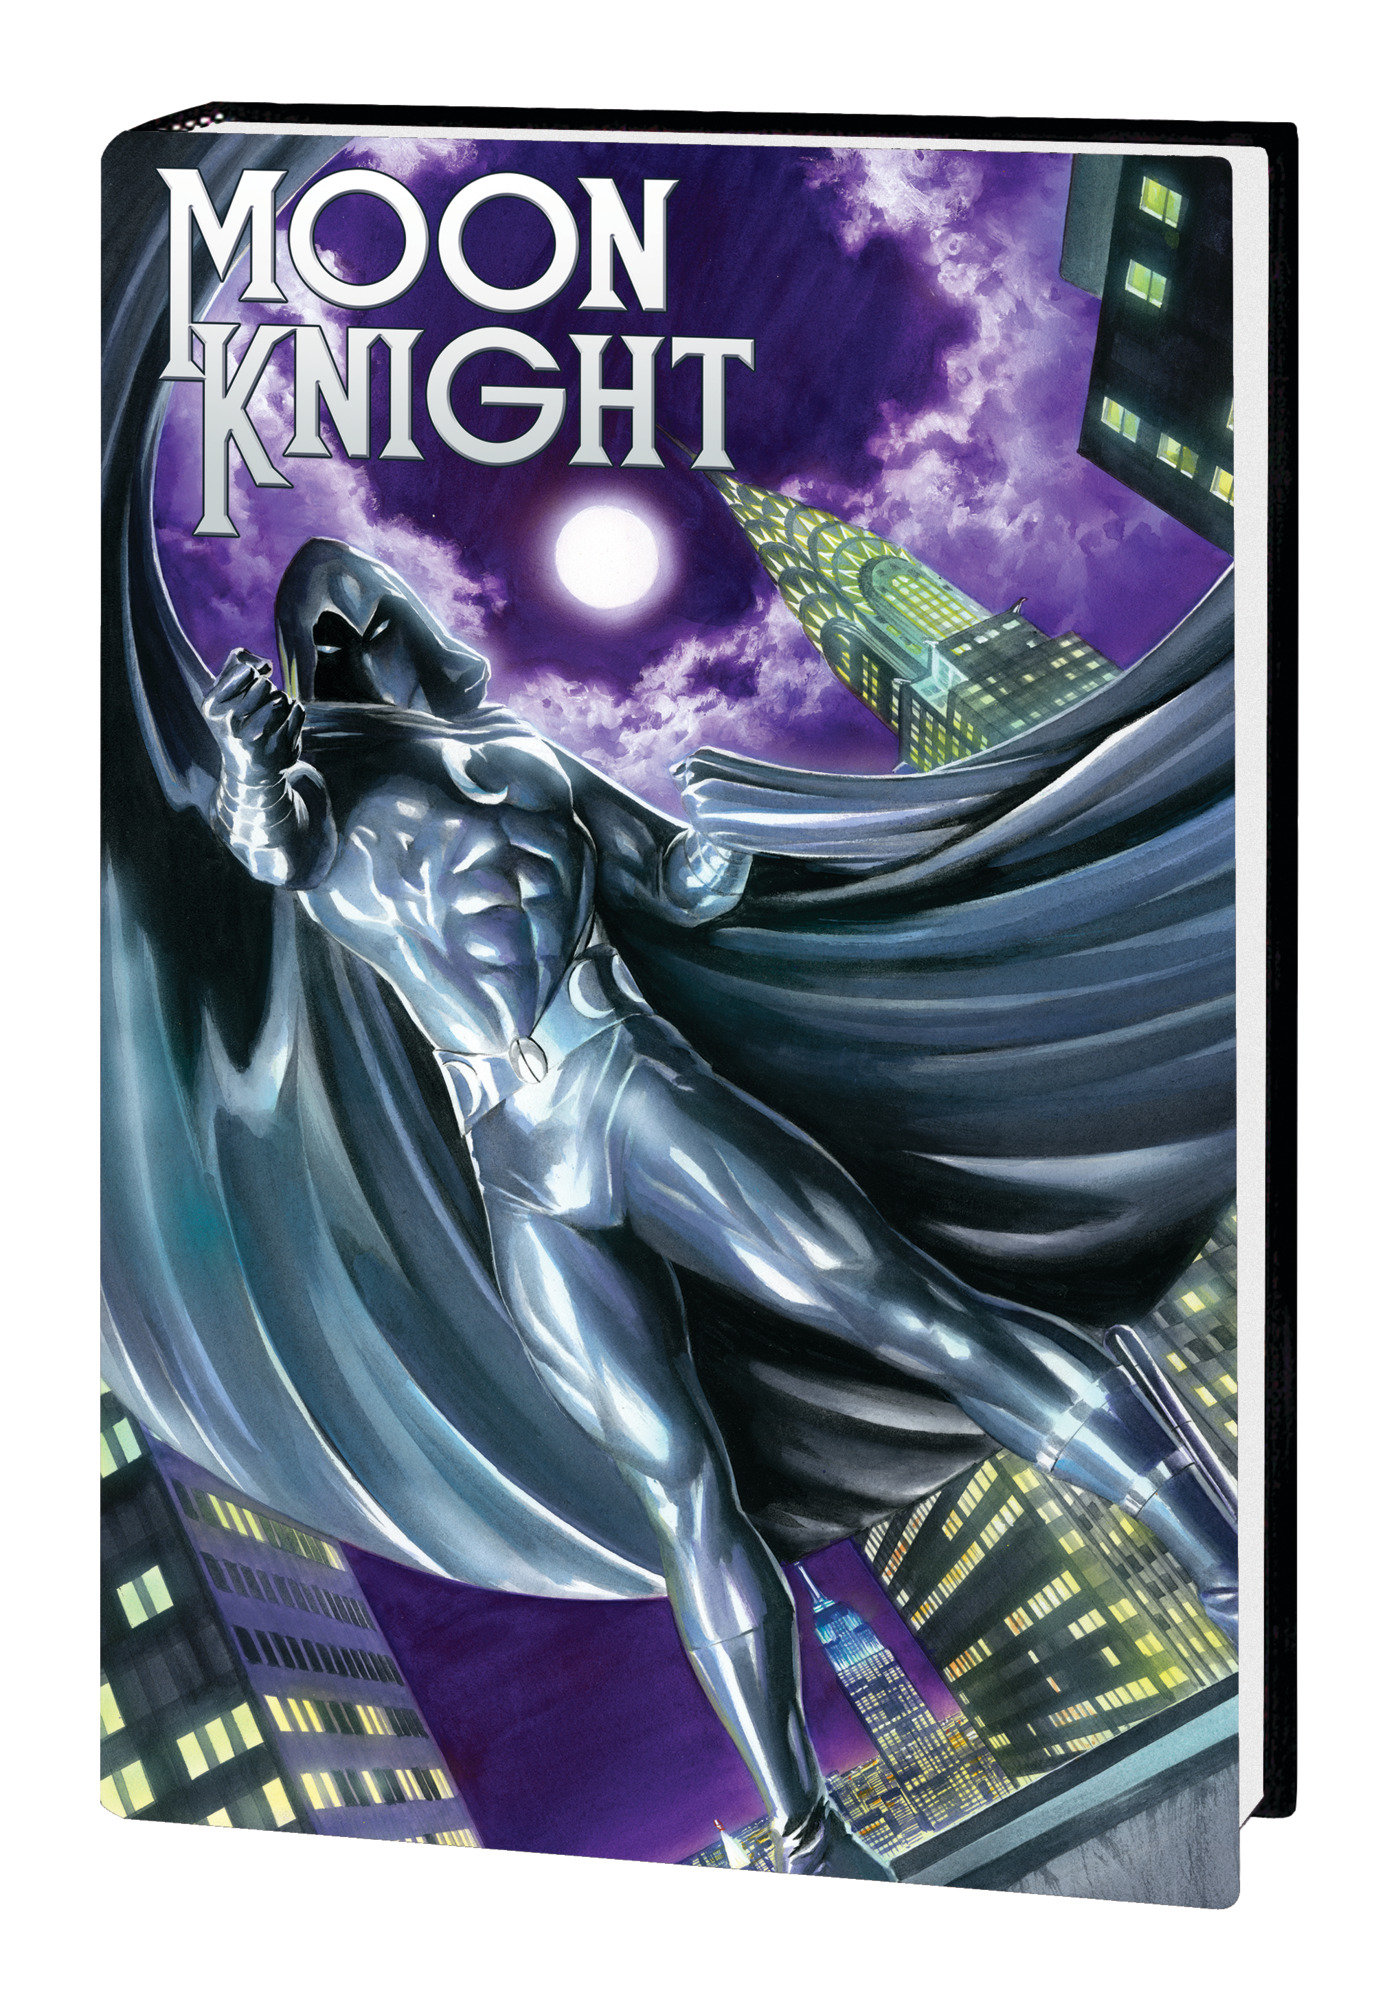 Moon Knight Omnibus Hardcover Volume 2 Alex Ross Cover